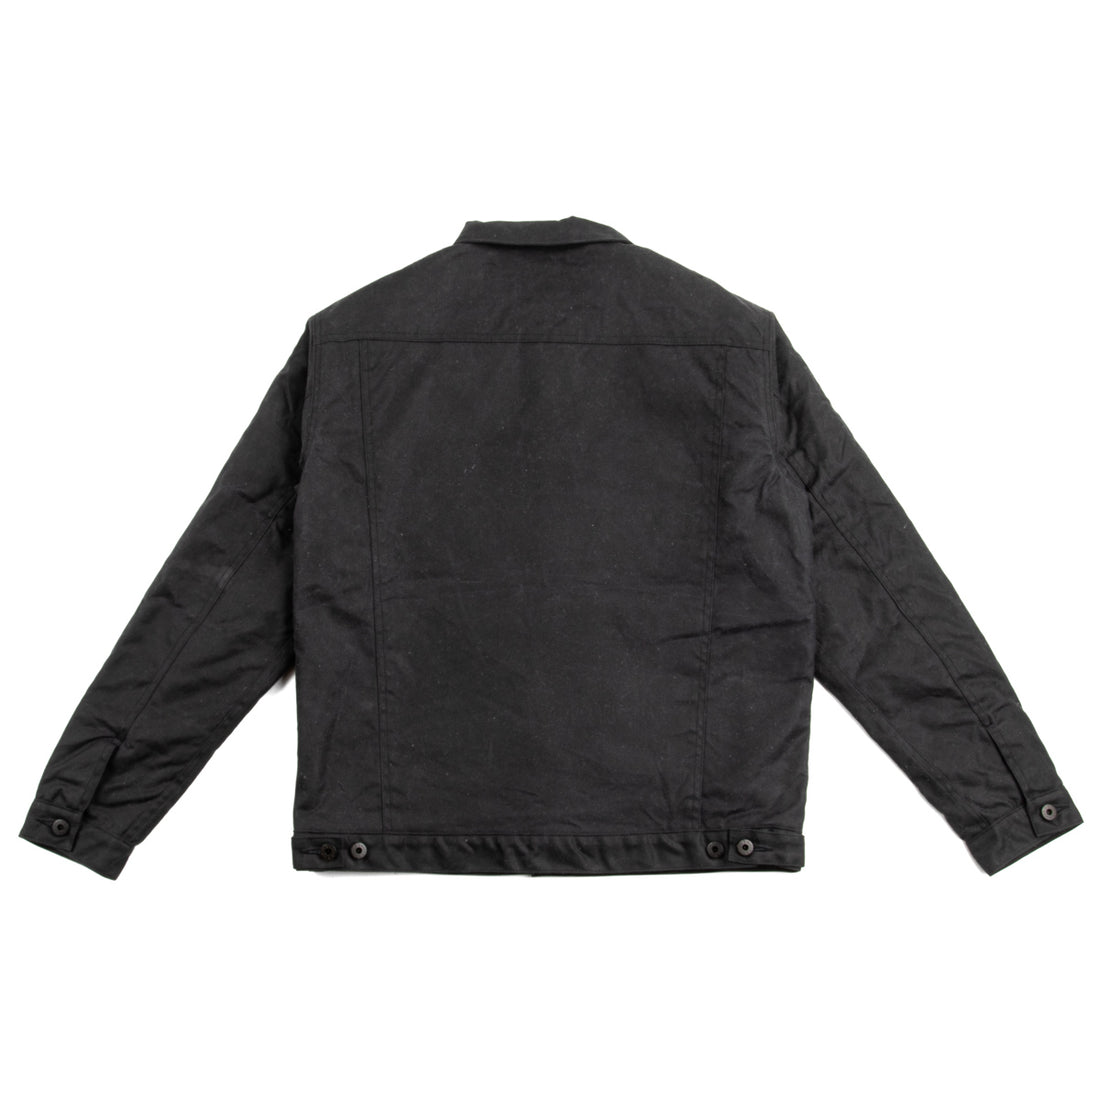 Ginew Wax Rider Coat - Black / Facing East - Standard & Strange